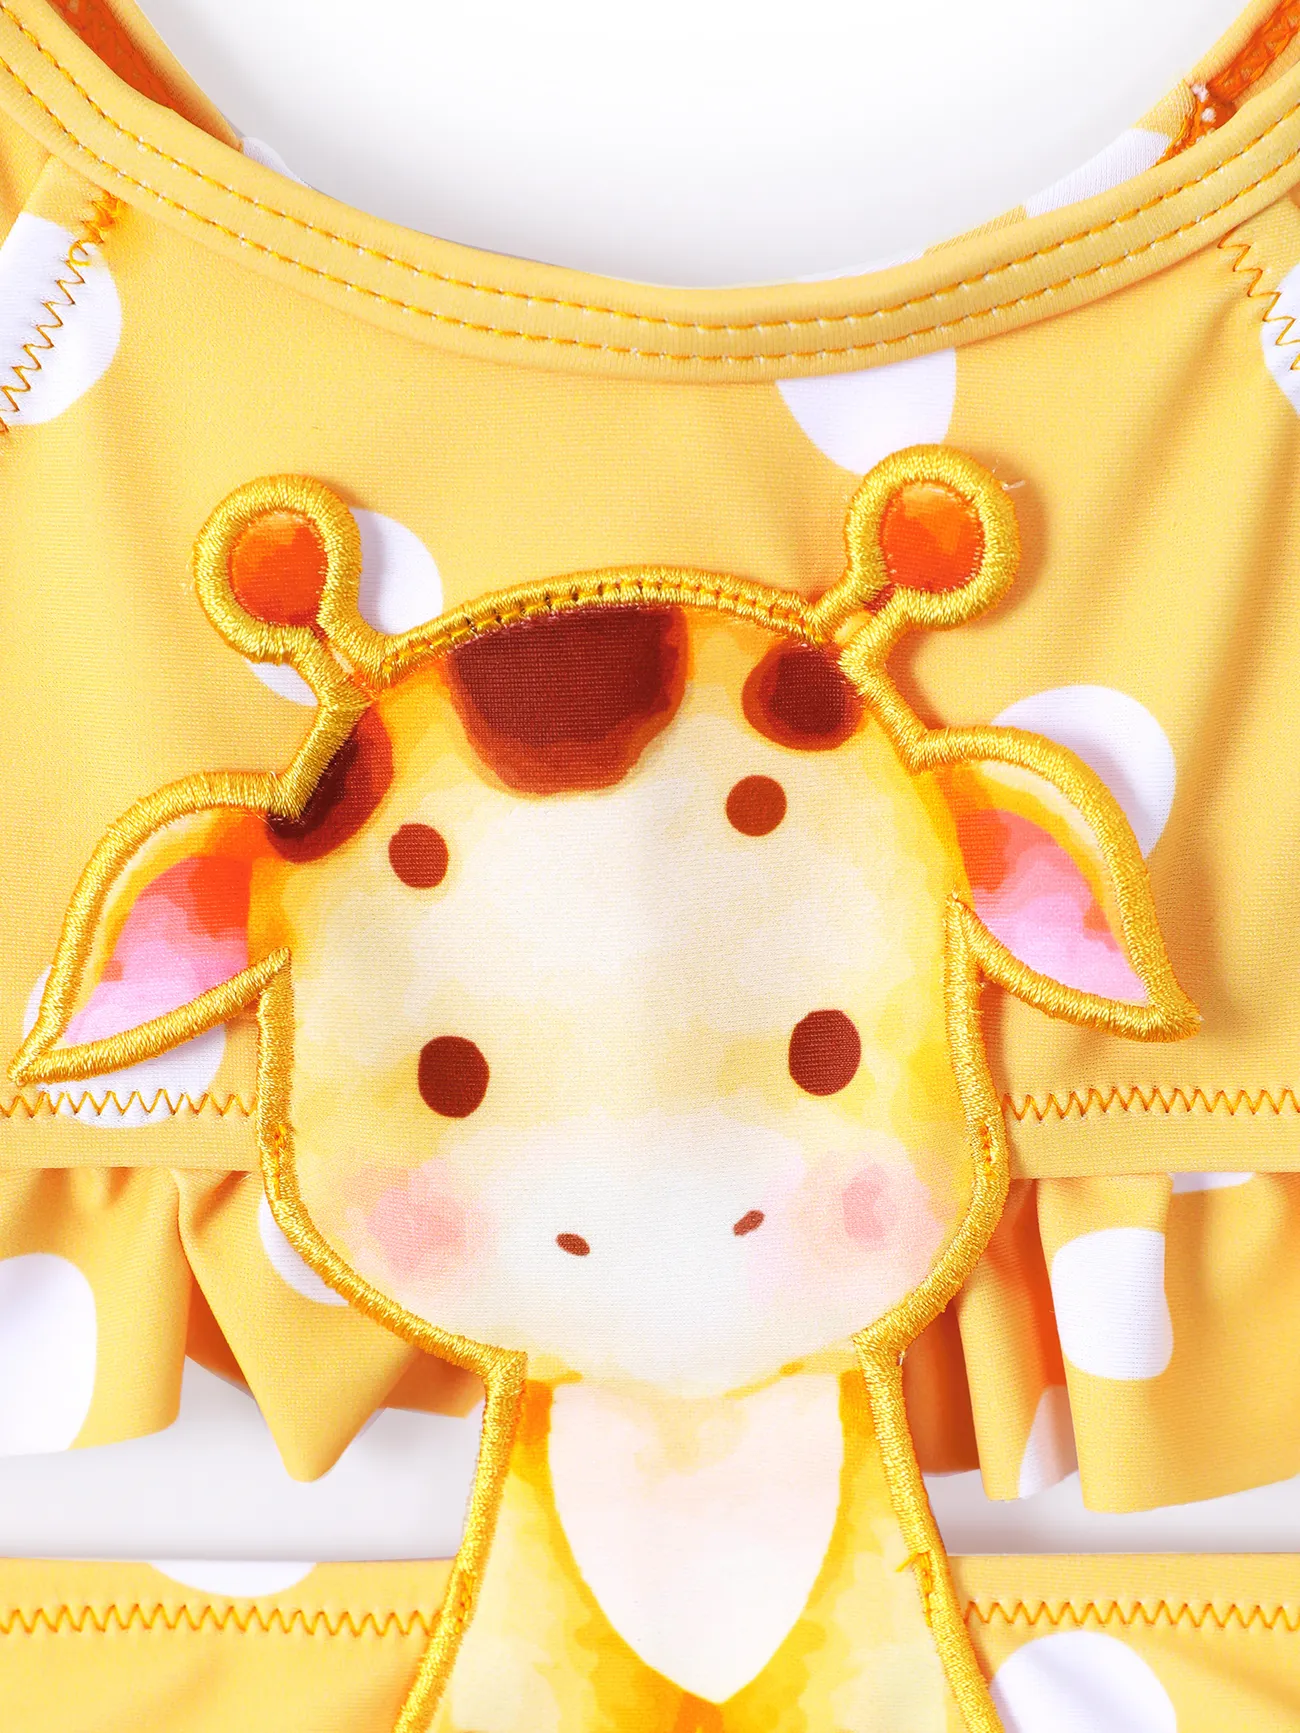 Baby Girl Giraffe Embroidery Ruffled Swimsuit Yellow big image 1